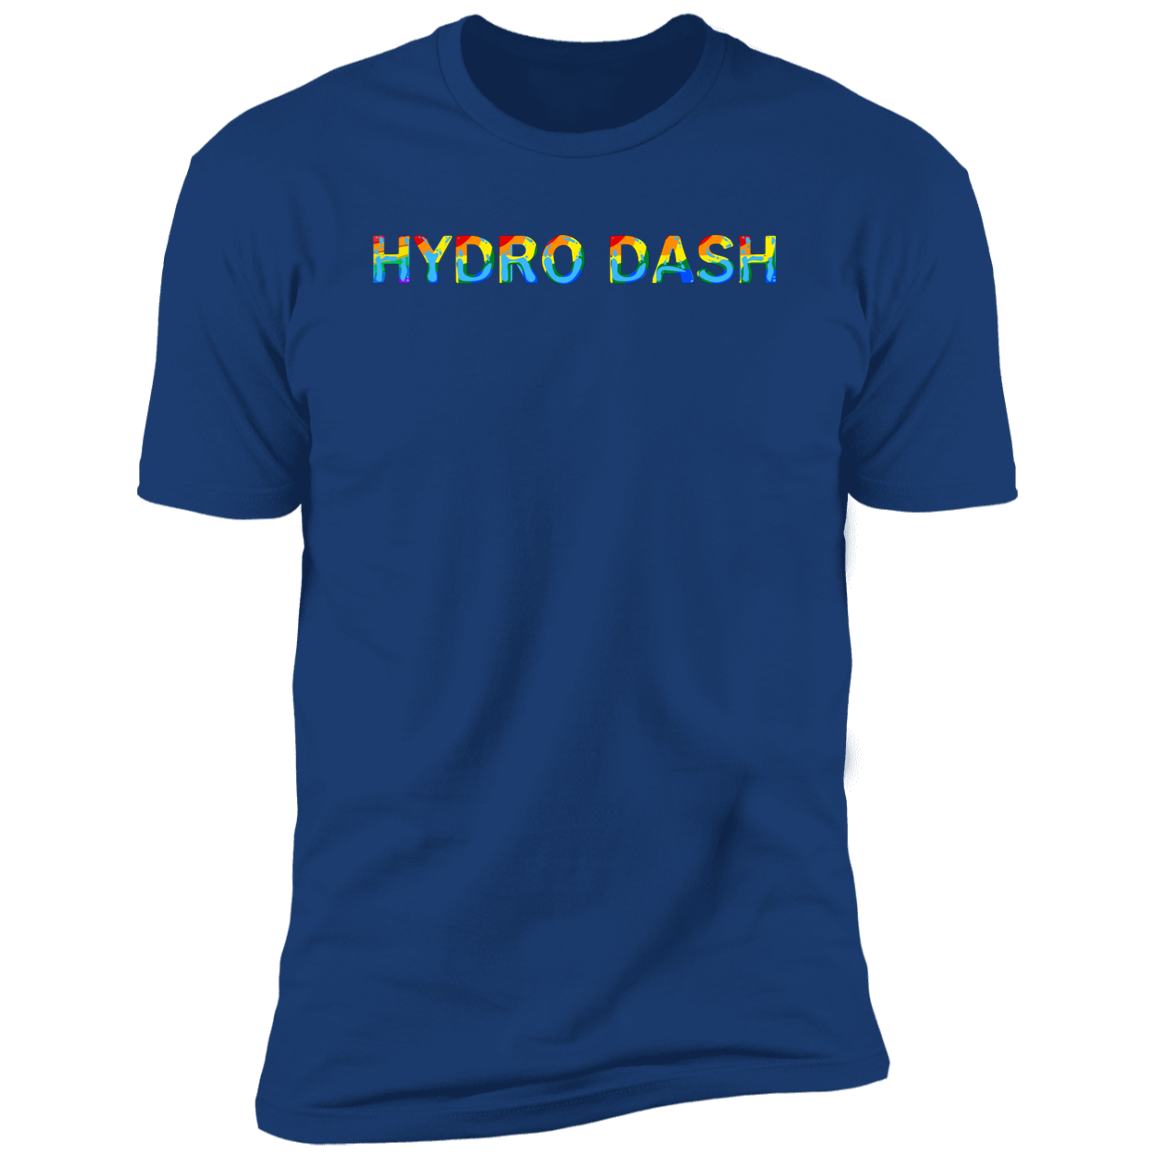  Hydro Dash Pride 2023  t-shirt, dog pride dog Hydro dash shirt for humans, in royal blue